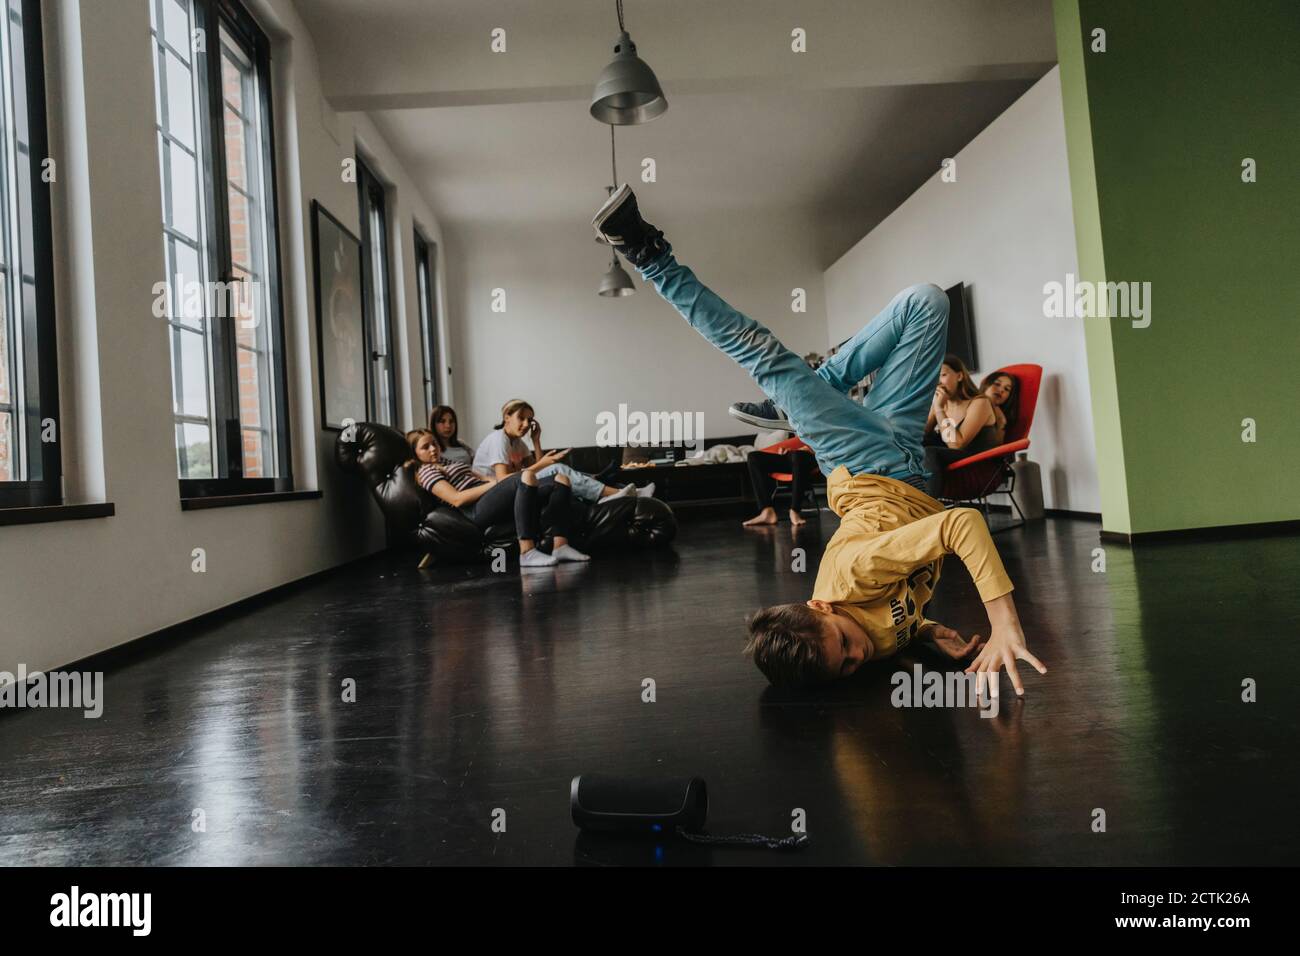 Friends looking at boy breakdancing on floor Stock Photo